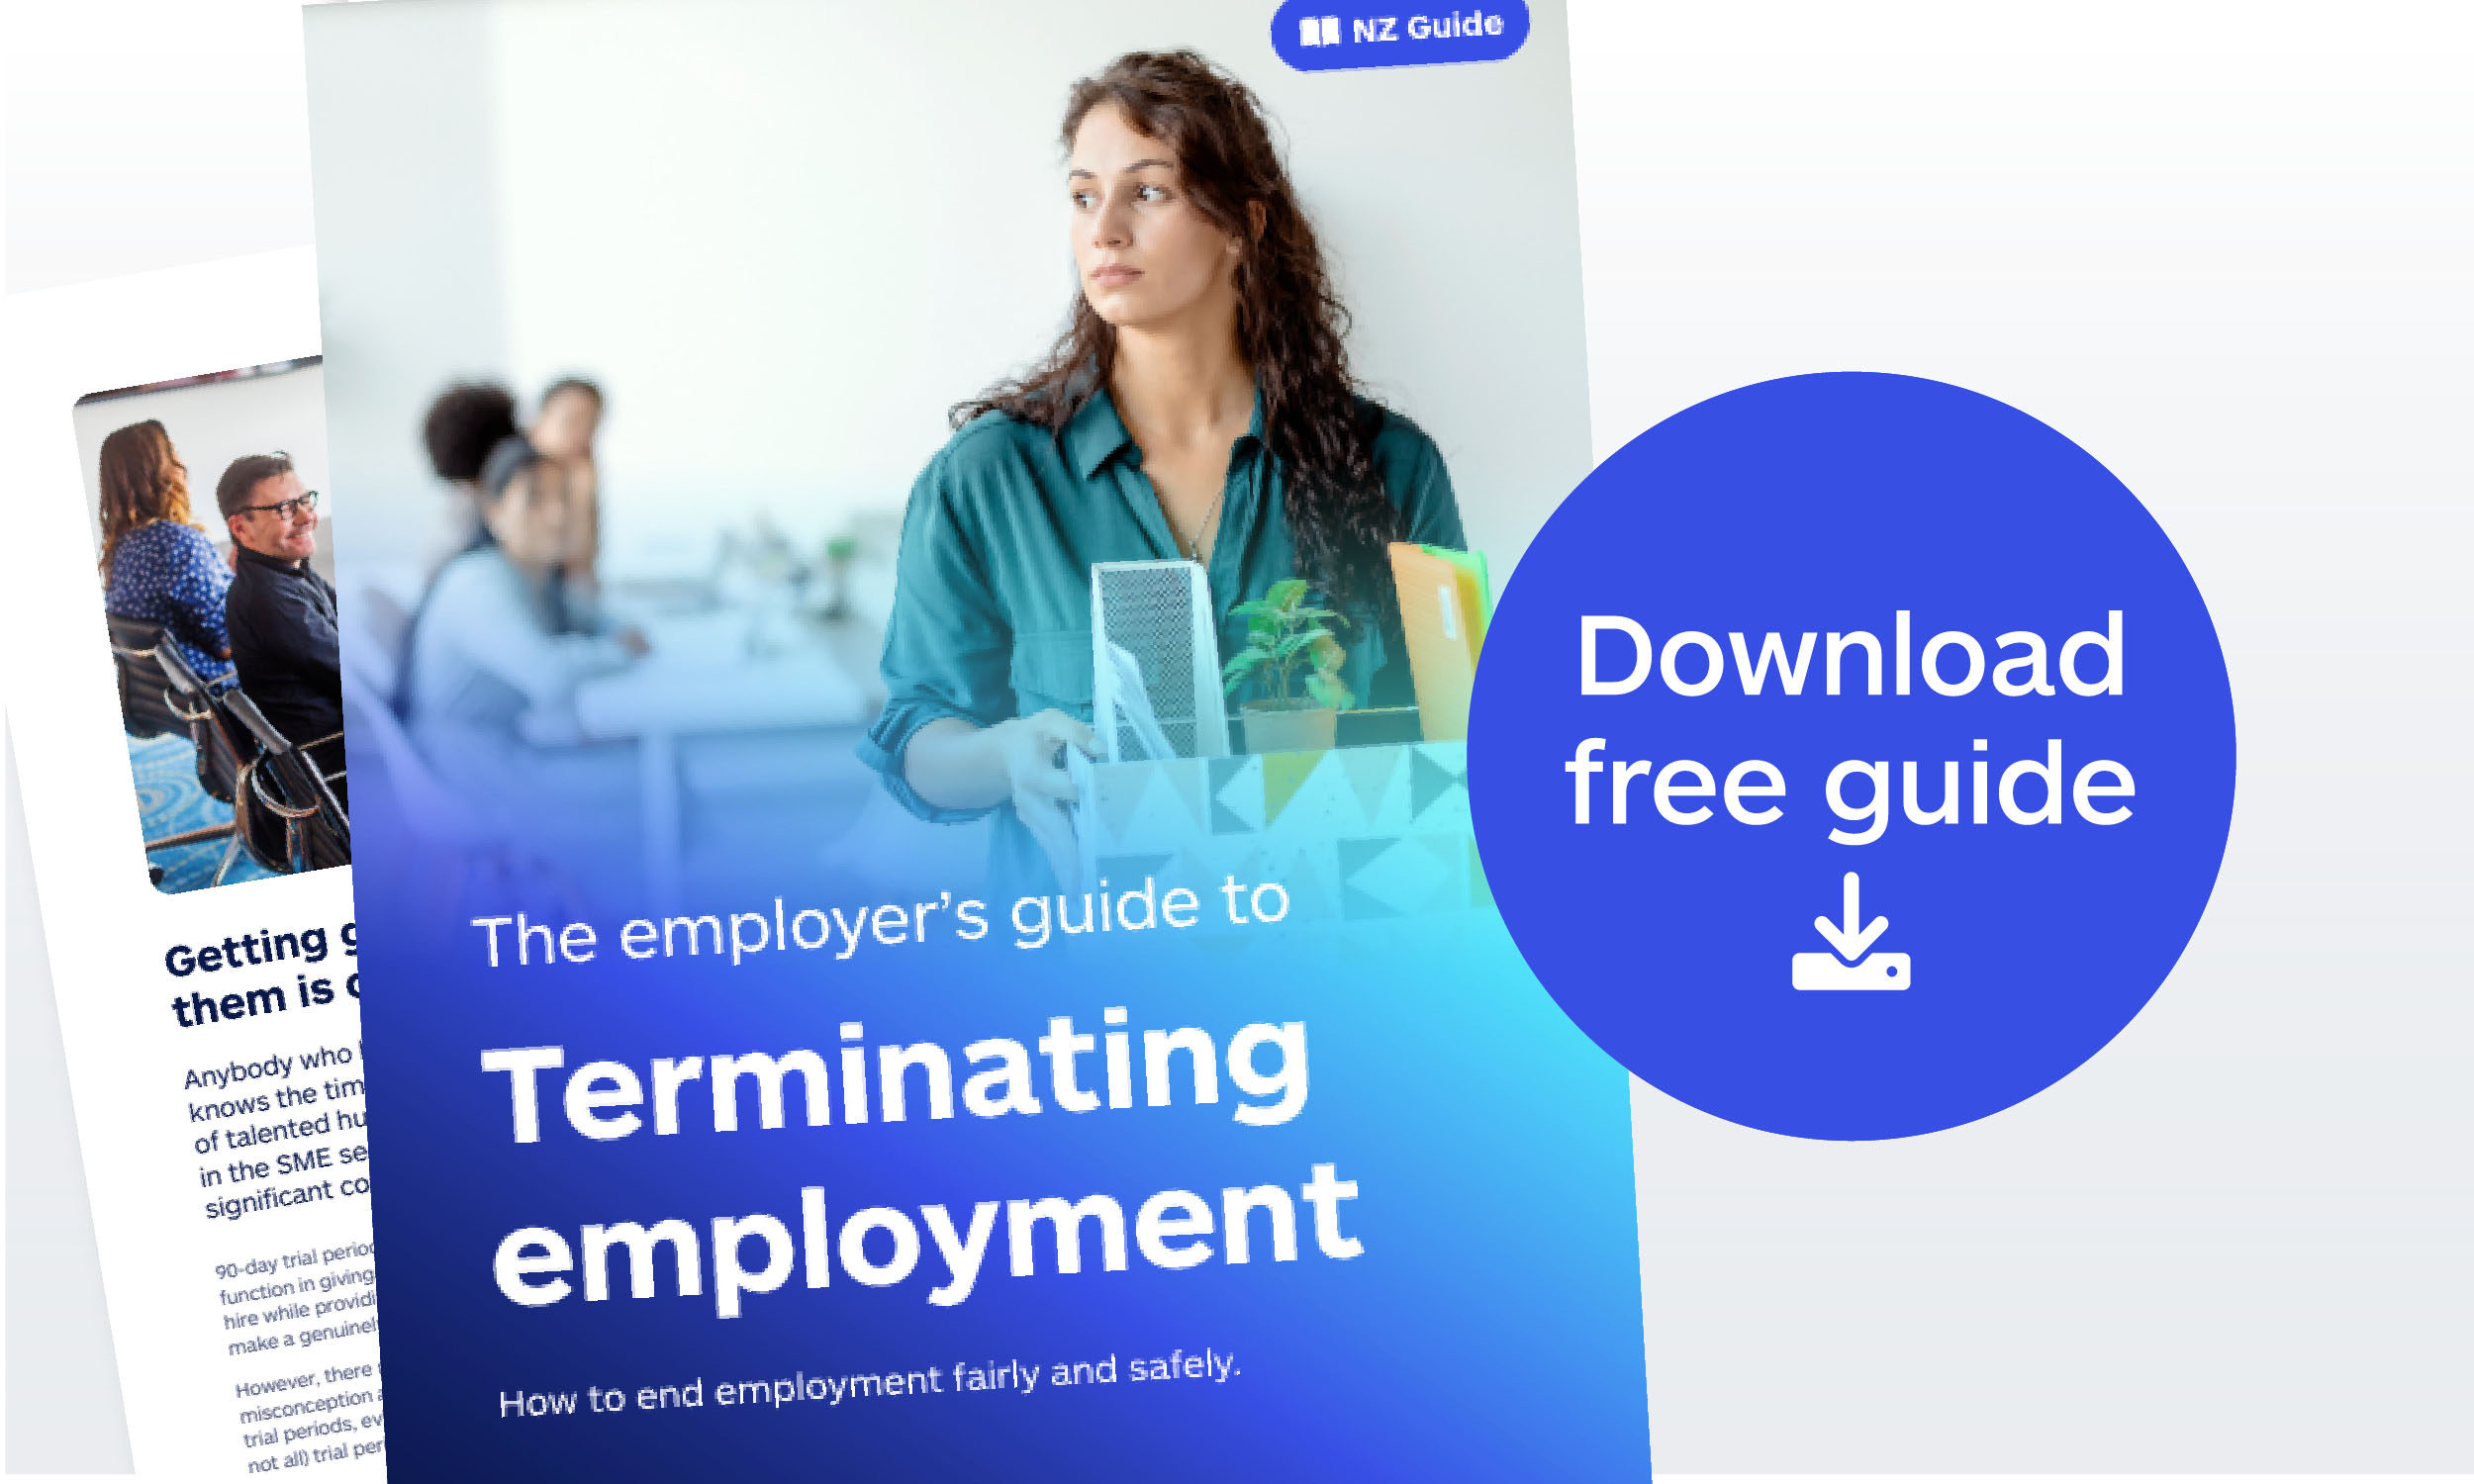 Terminating employment